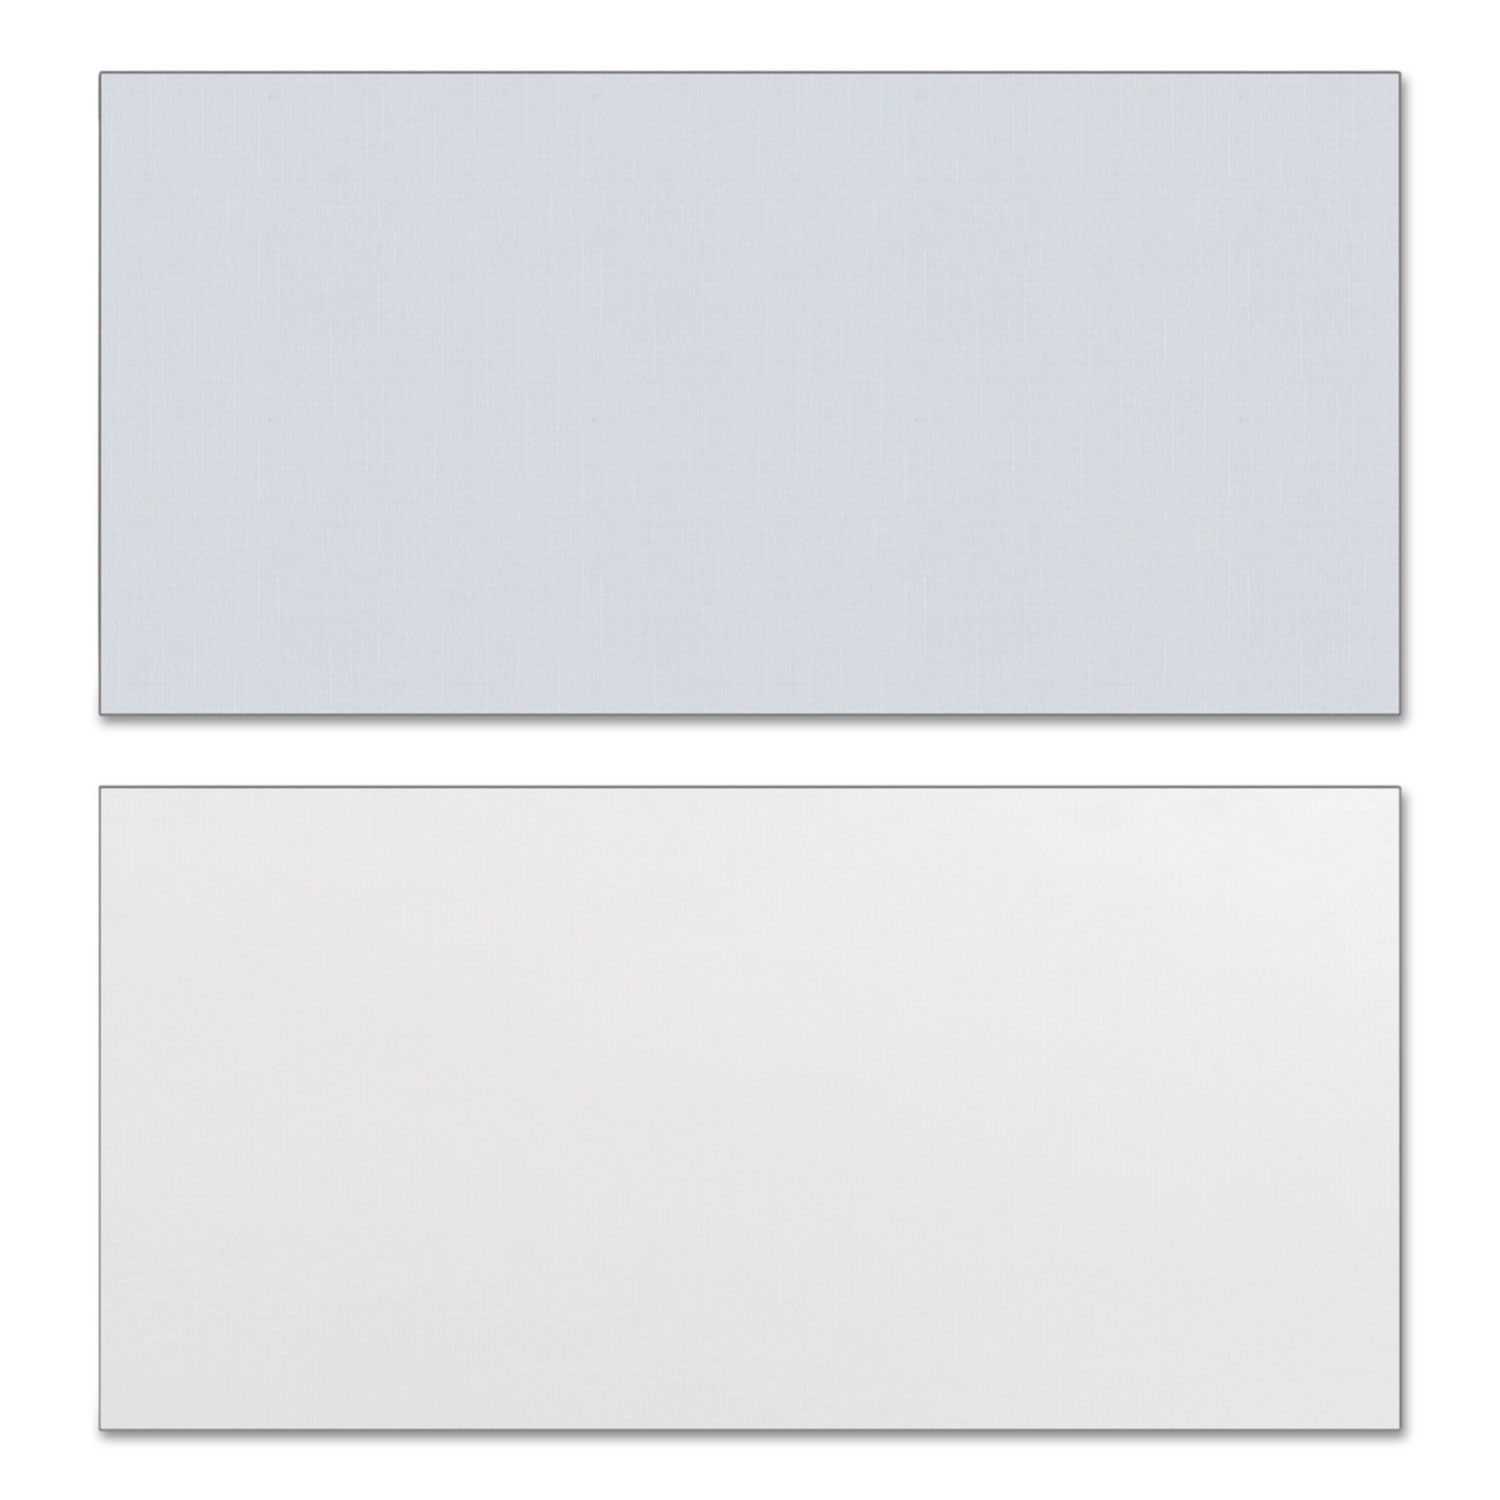 Reversible Laminate Table Top, Rectangular, 59 1/2w x 23 5/8d, White/Gray